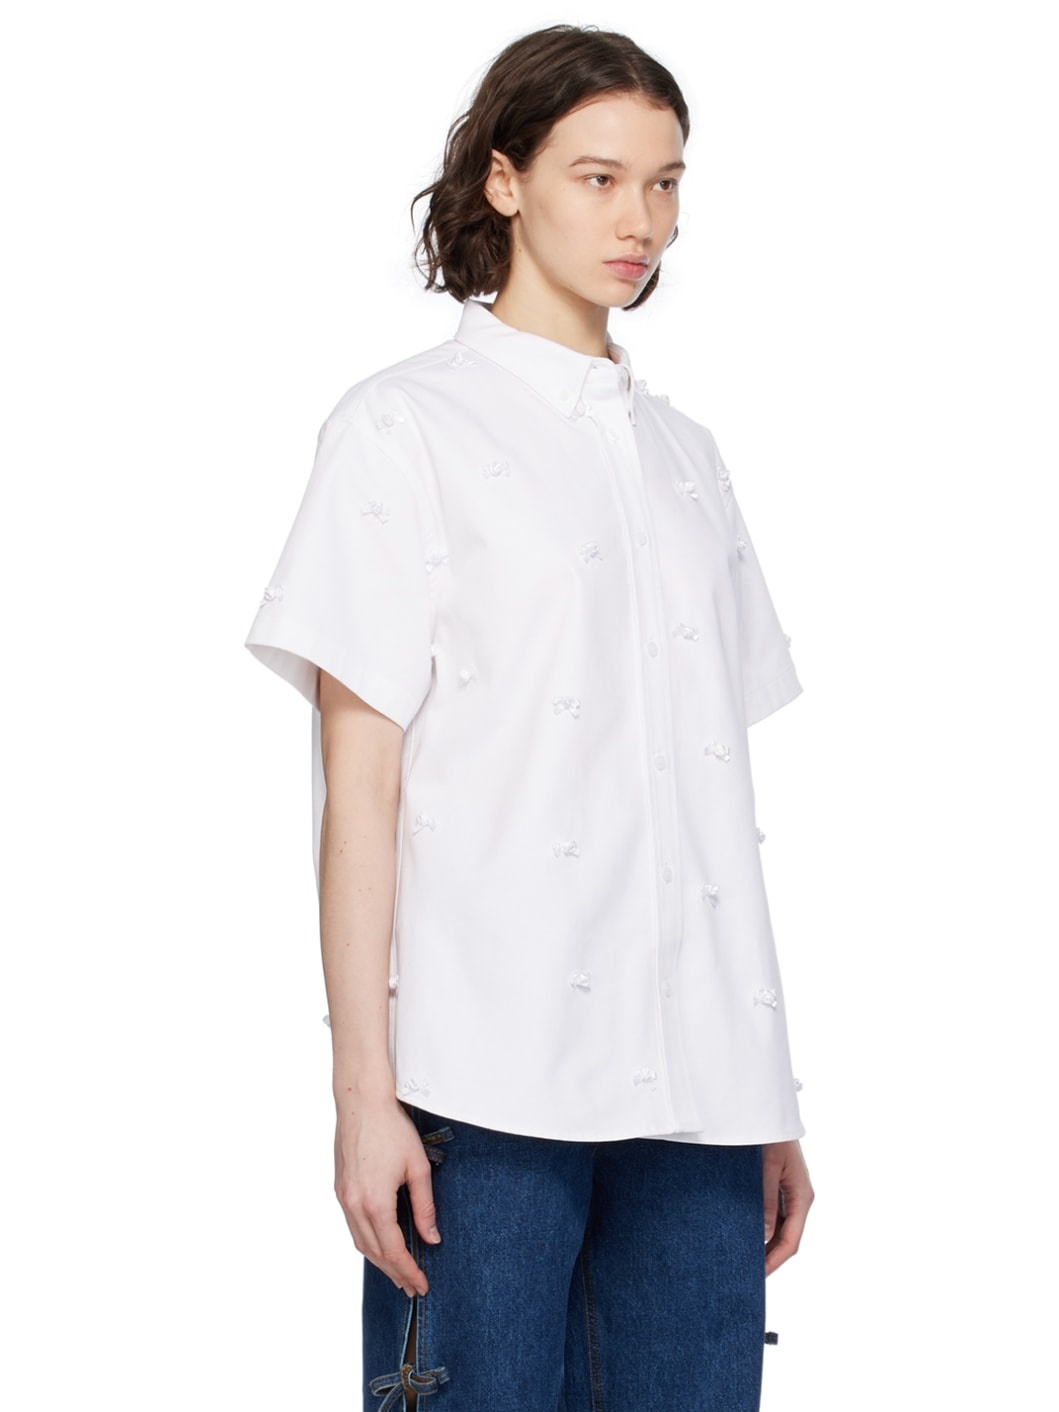 White Ribbon Shirt - 2